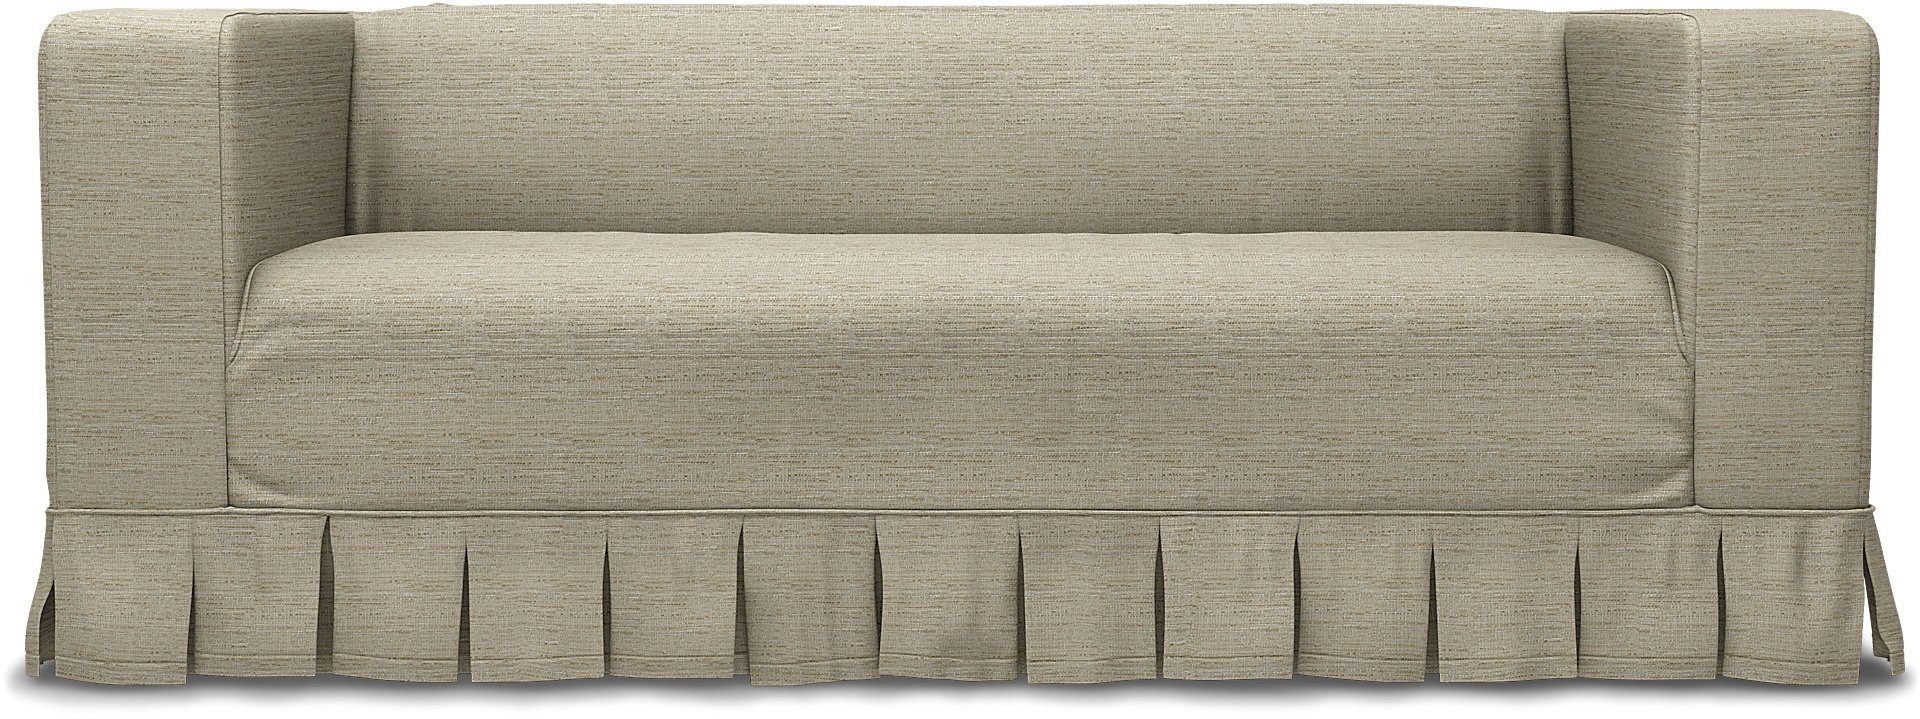 IKEA - Klippan 2 Seater Sofa Cover, Light Sand, Boucle & Texture - Bemz